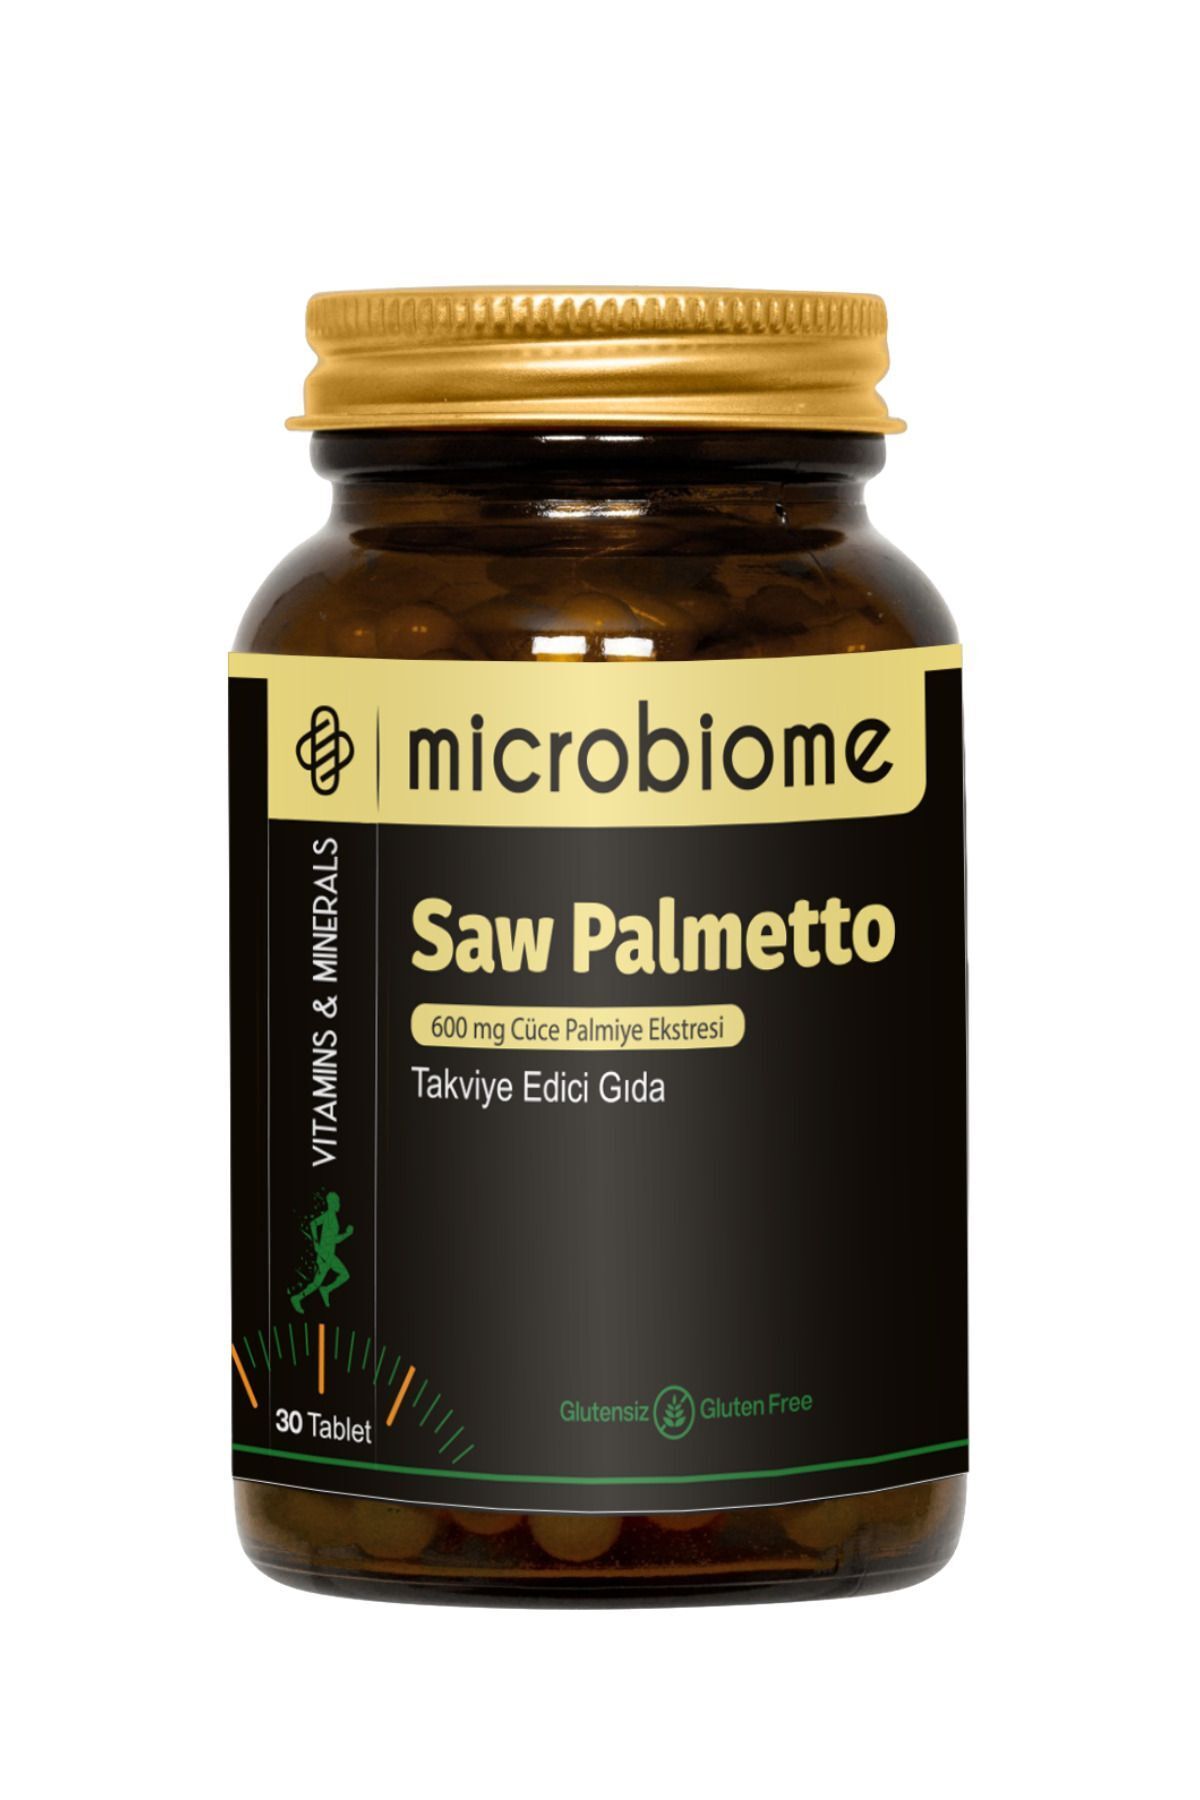 Microbiome Saw Palmetto 30 Tablet (Cüce Palmiye Ektresi)